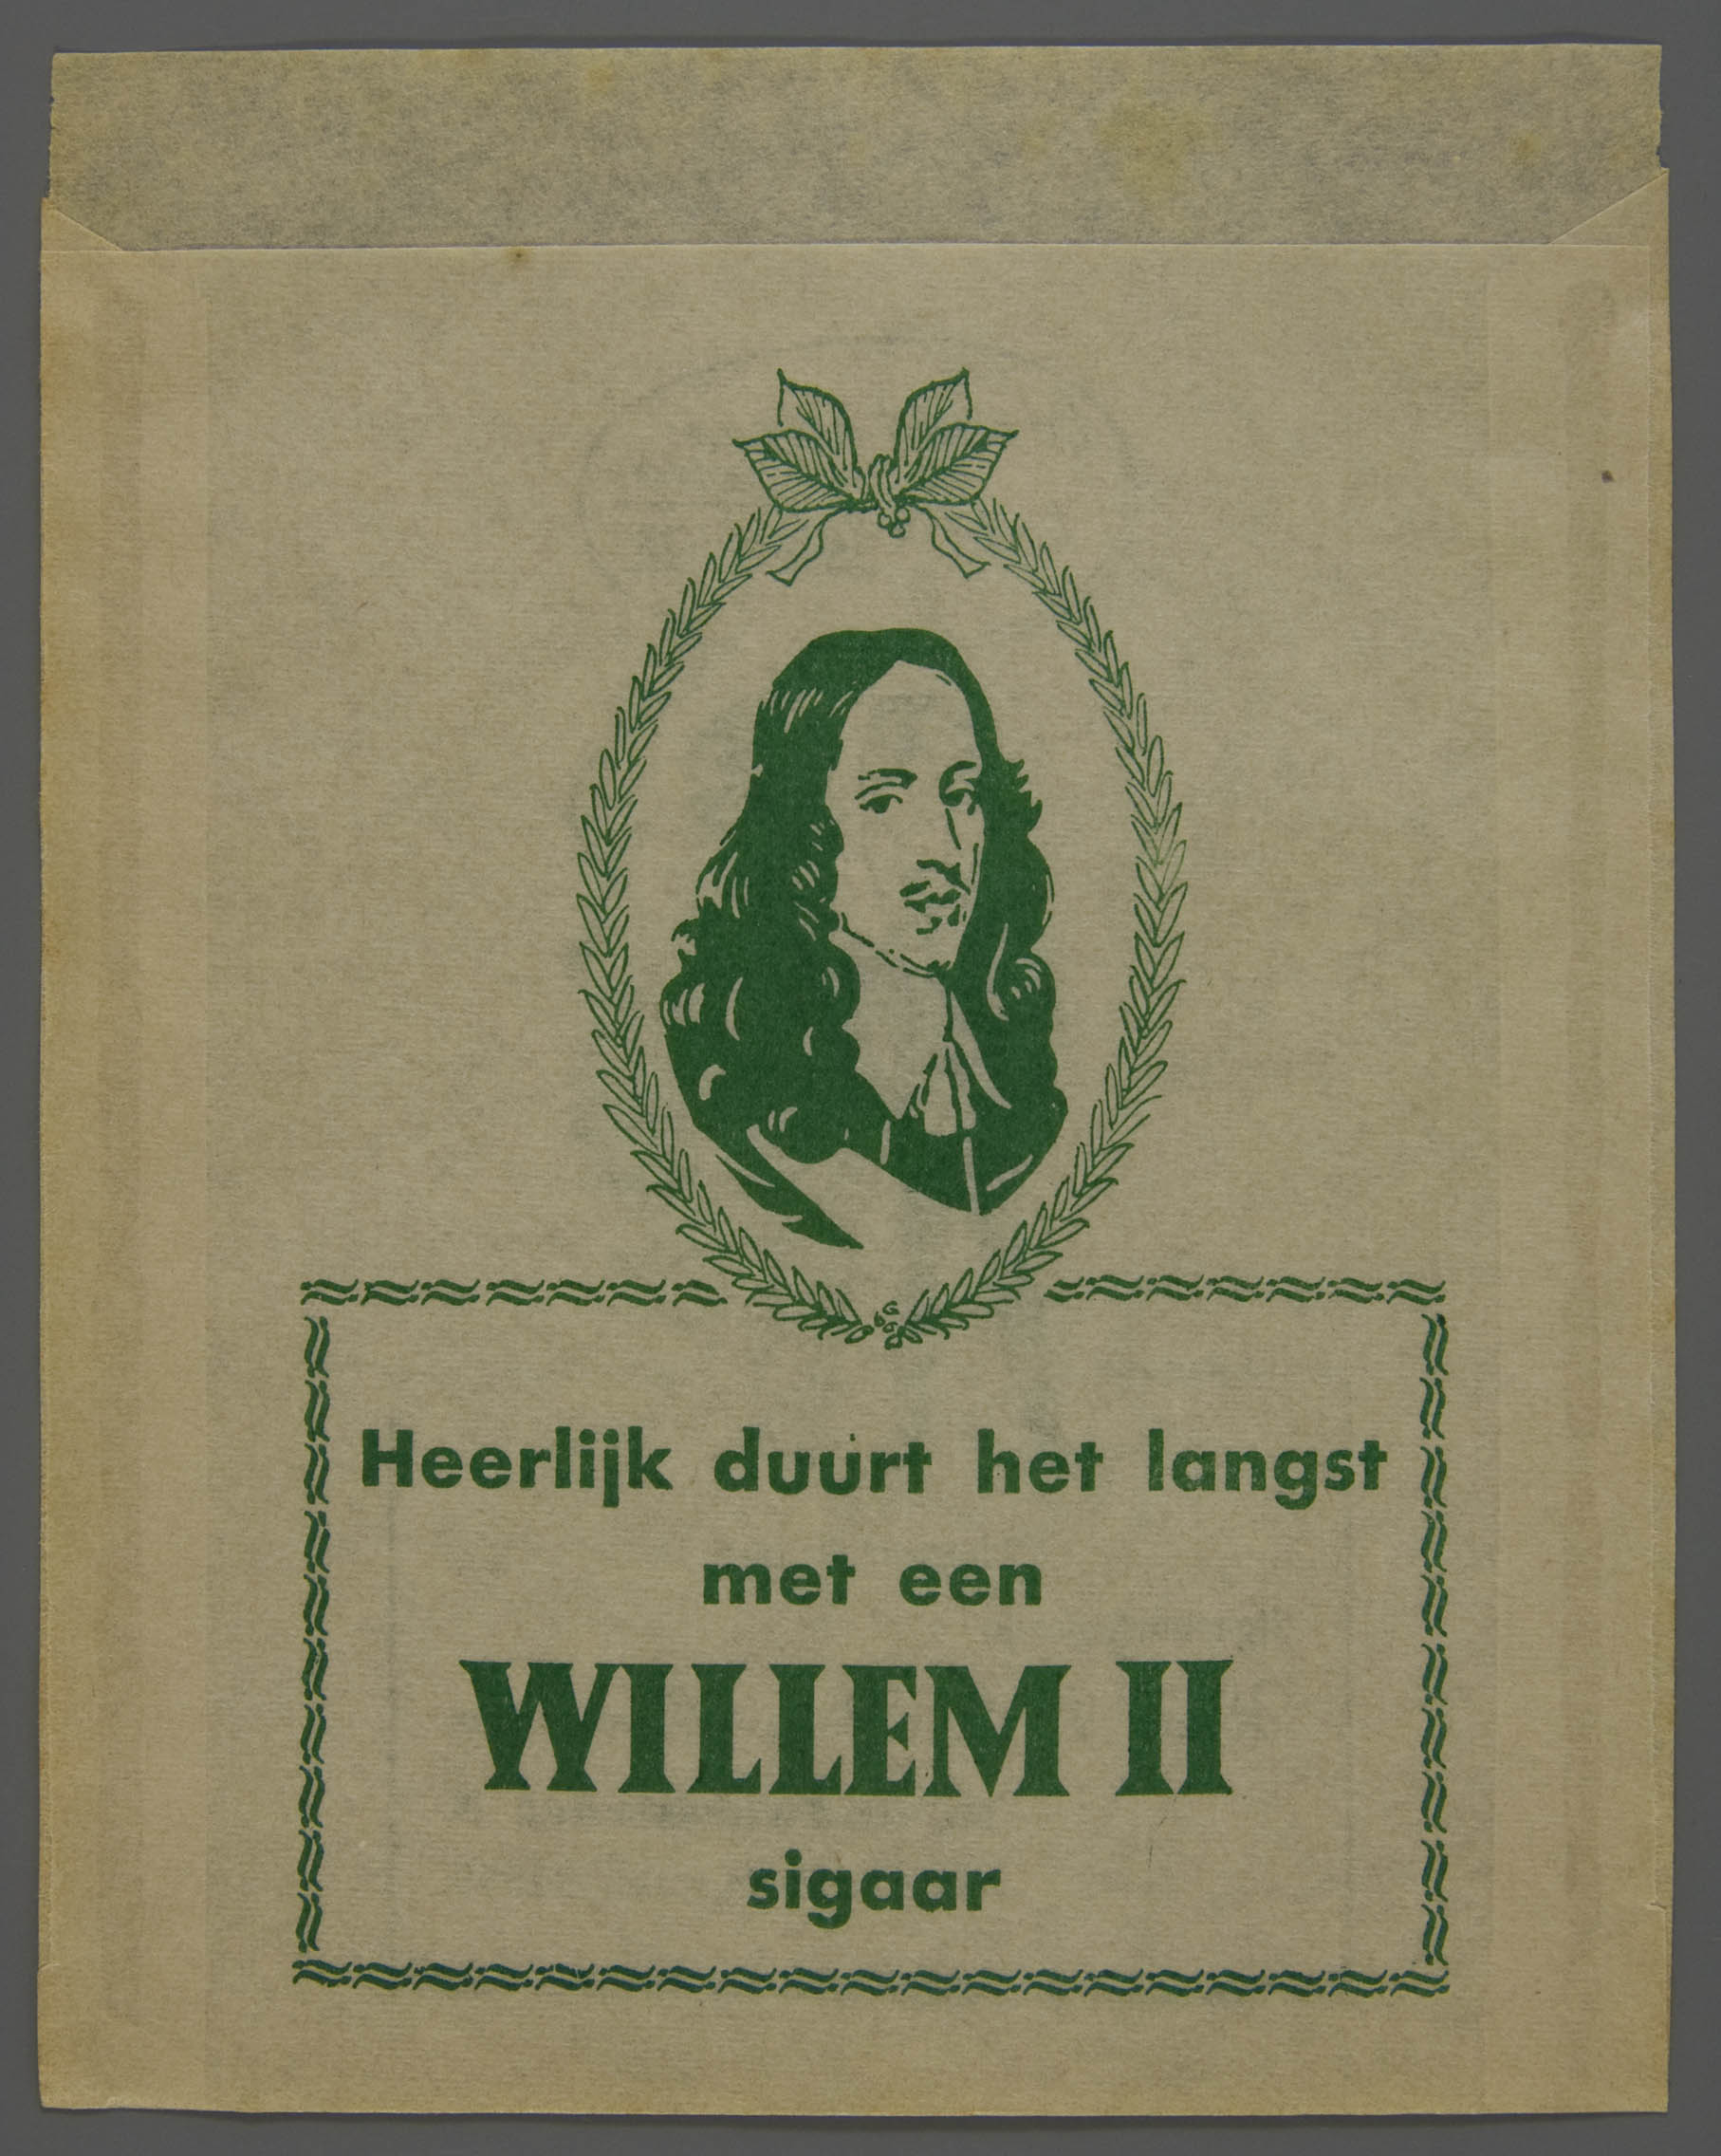 83-25.885-amsterdam-cigar-bag-willem-ii-5